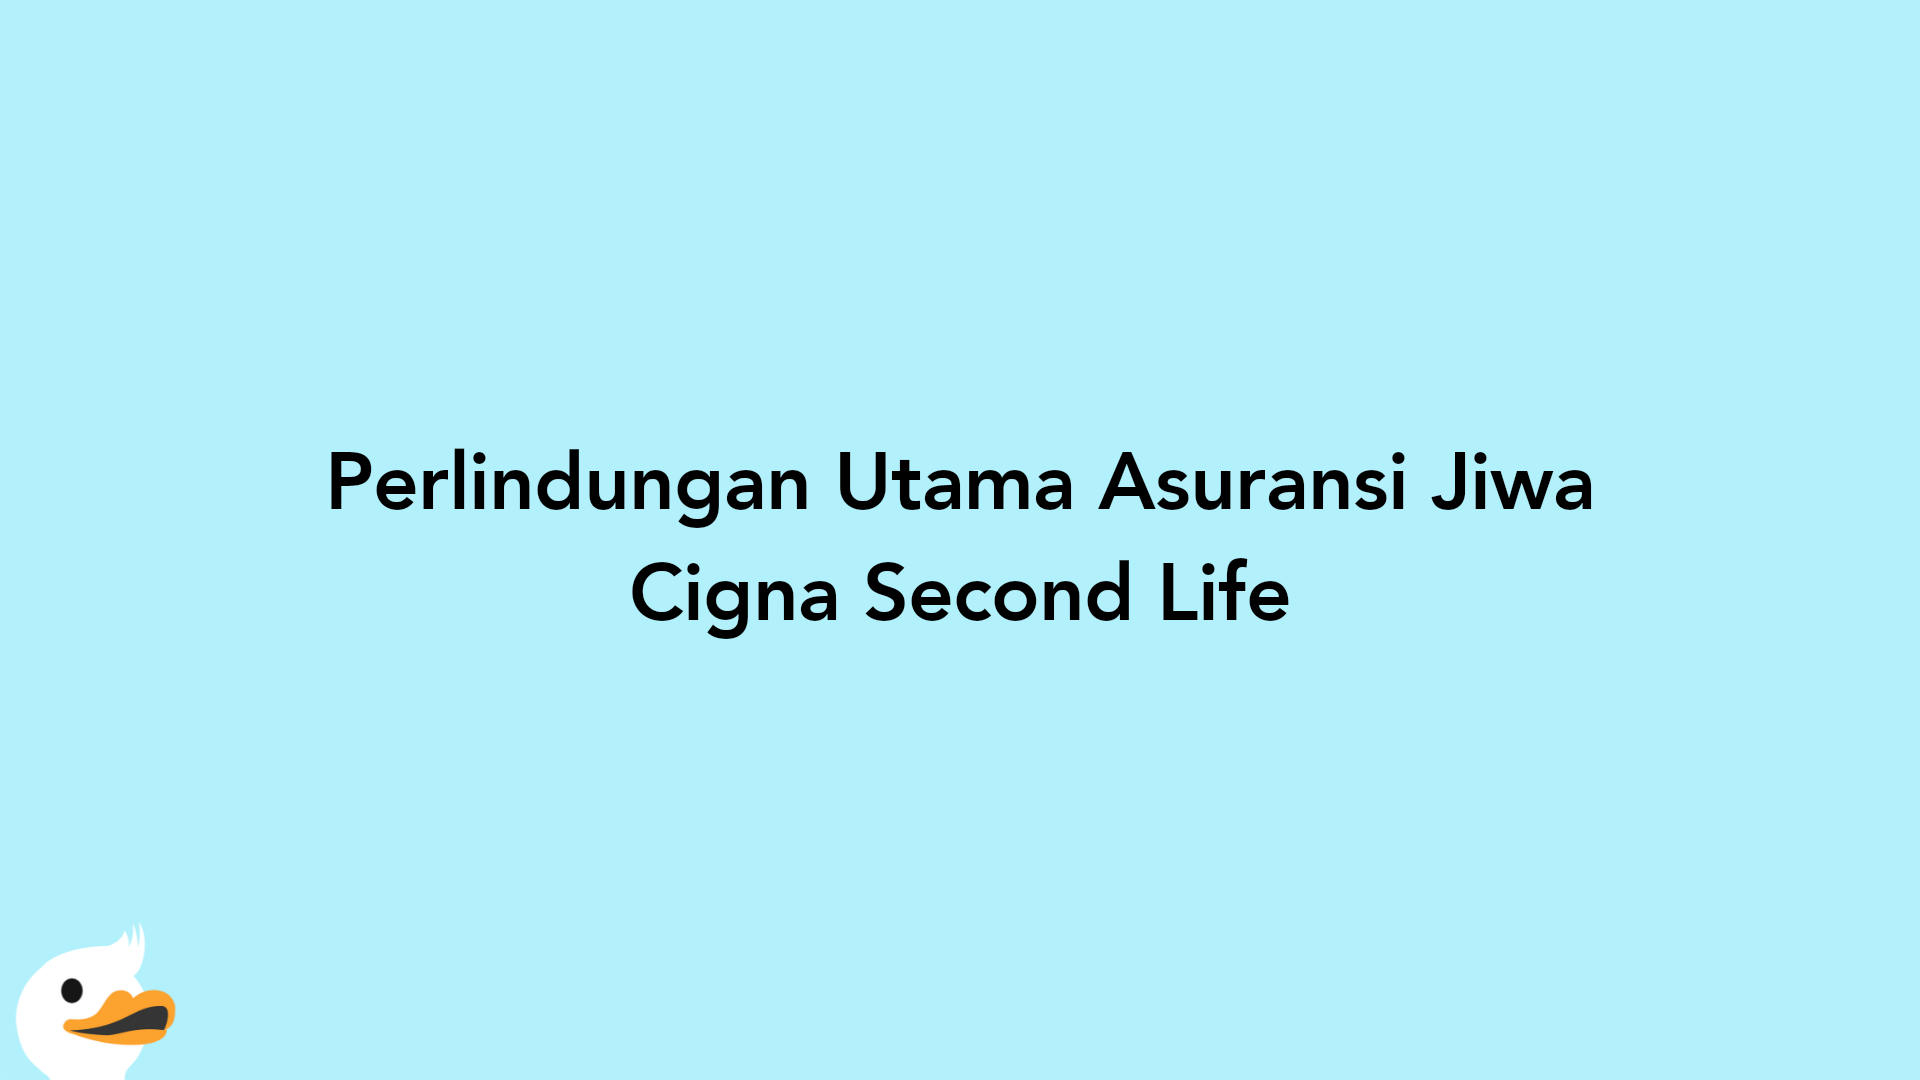 Perlindungan Utama Asuransi Jiwa Cigna Second Life